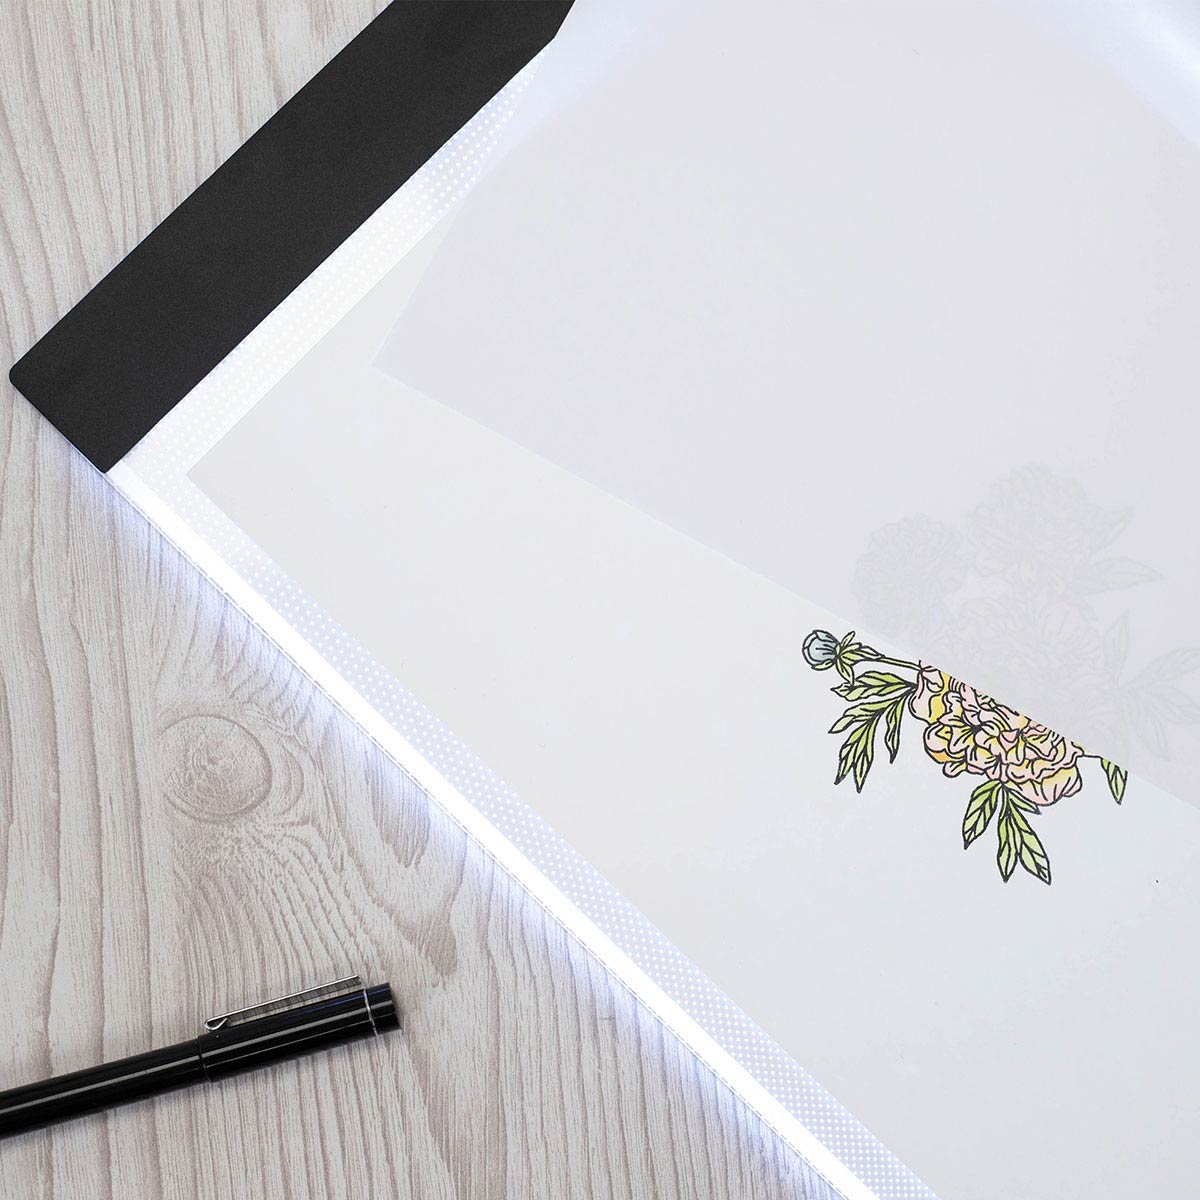 Crafter's Companion - Trampe à lumière LED Tracer / boîte lumineuse